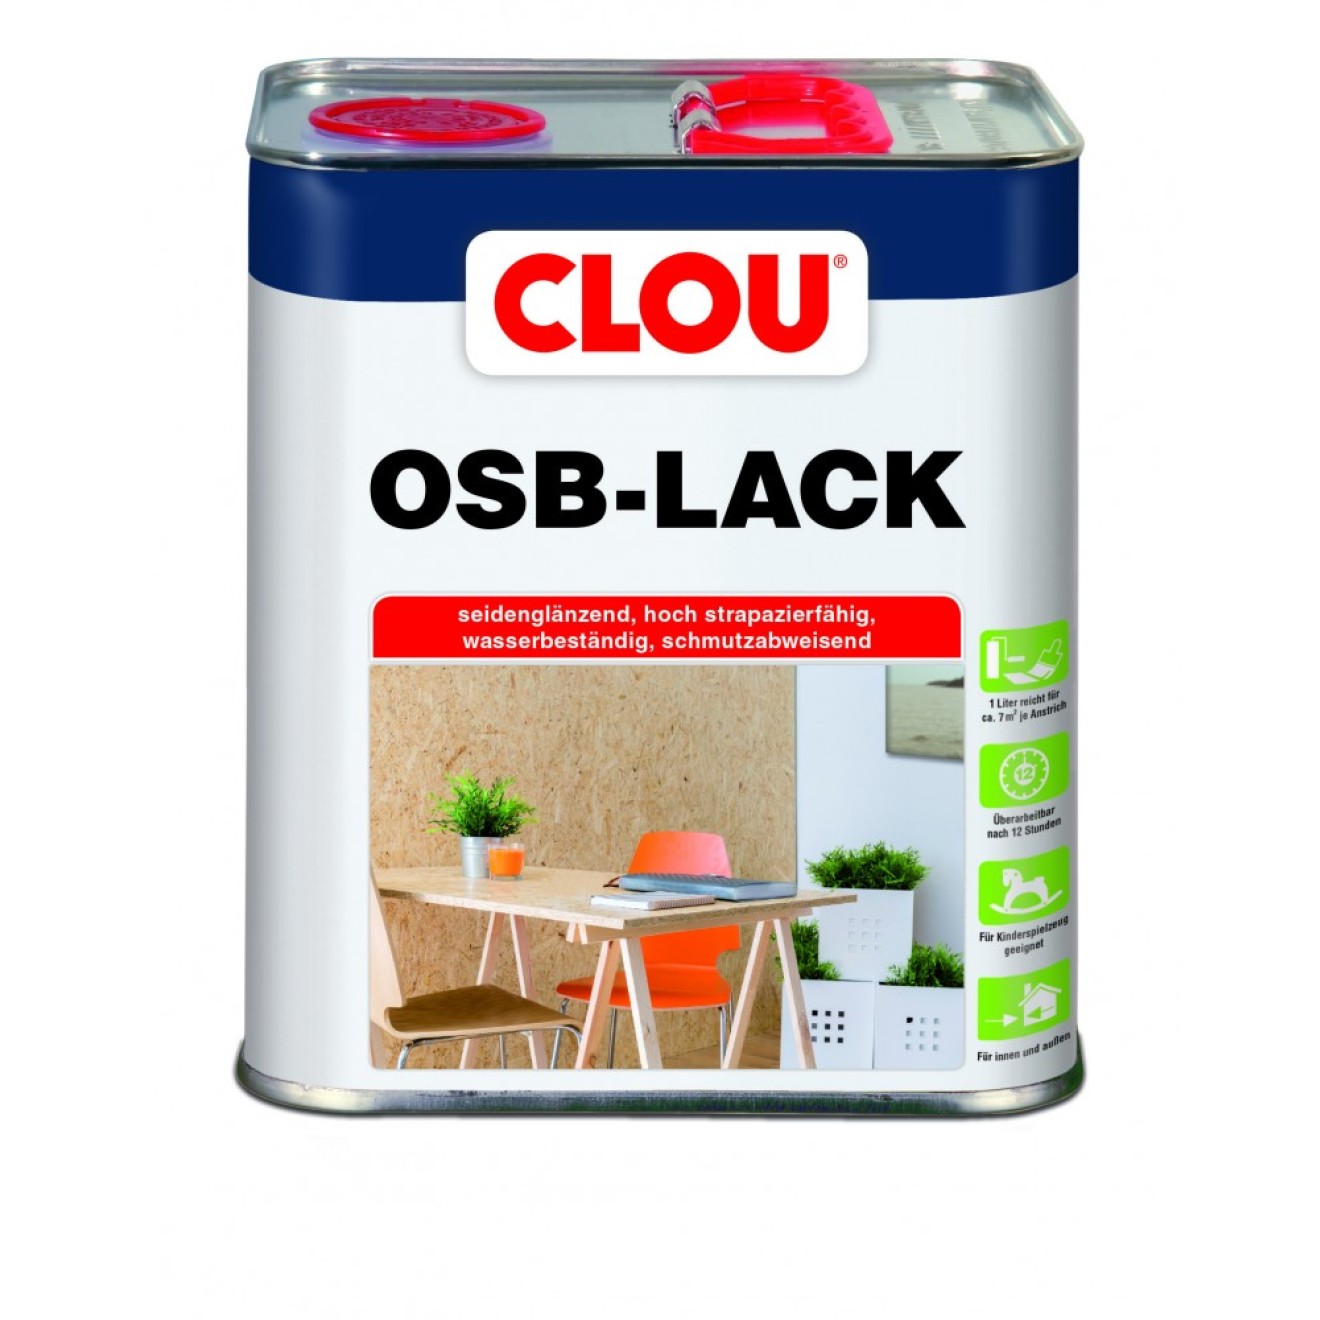 Clou OSB Lack